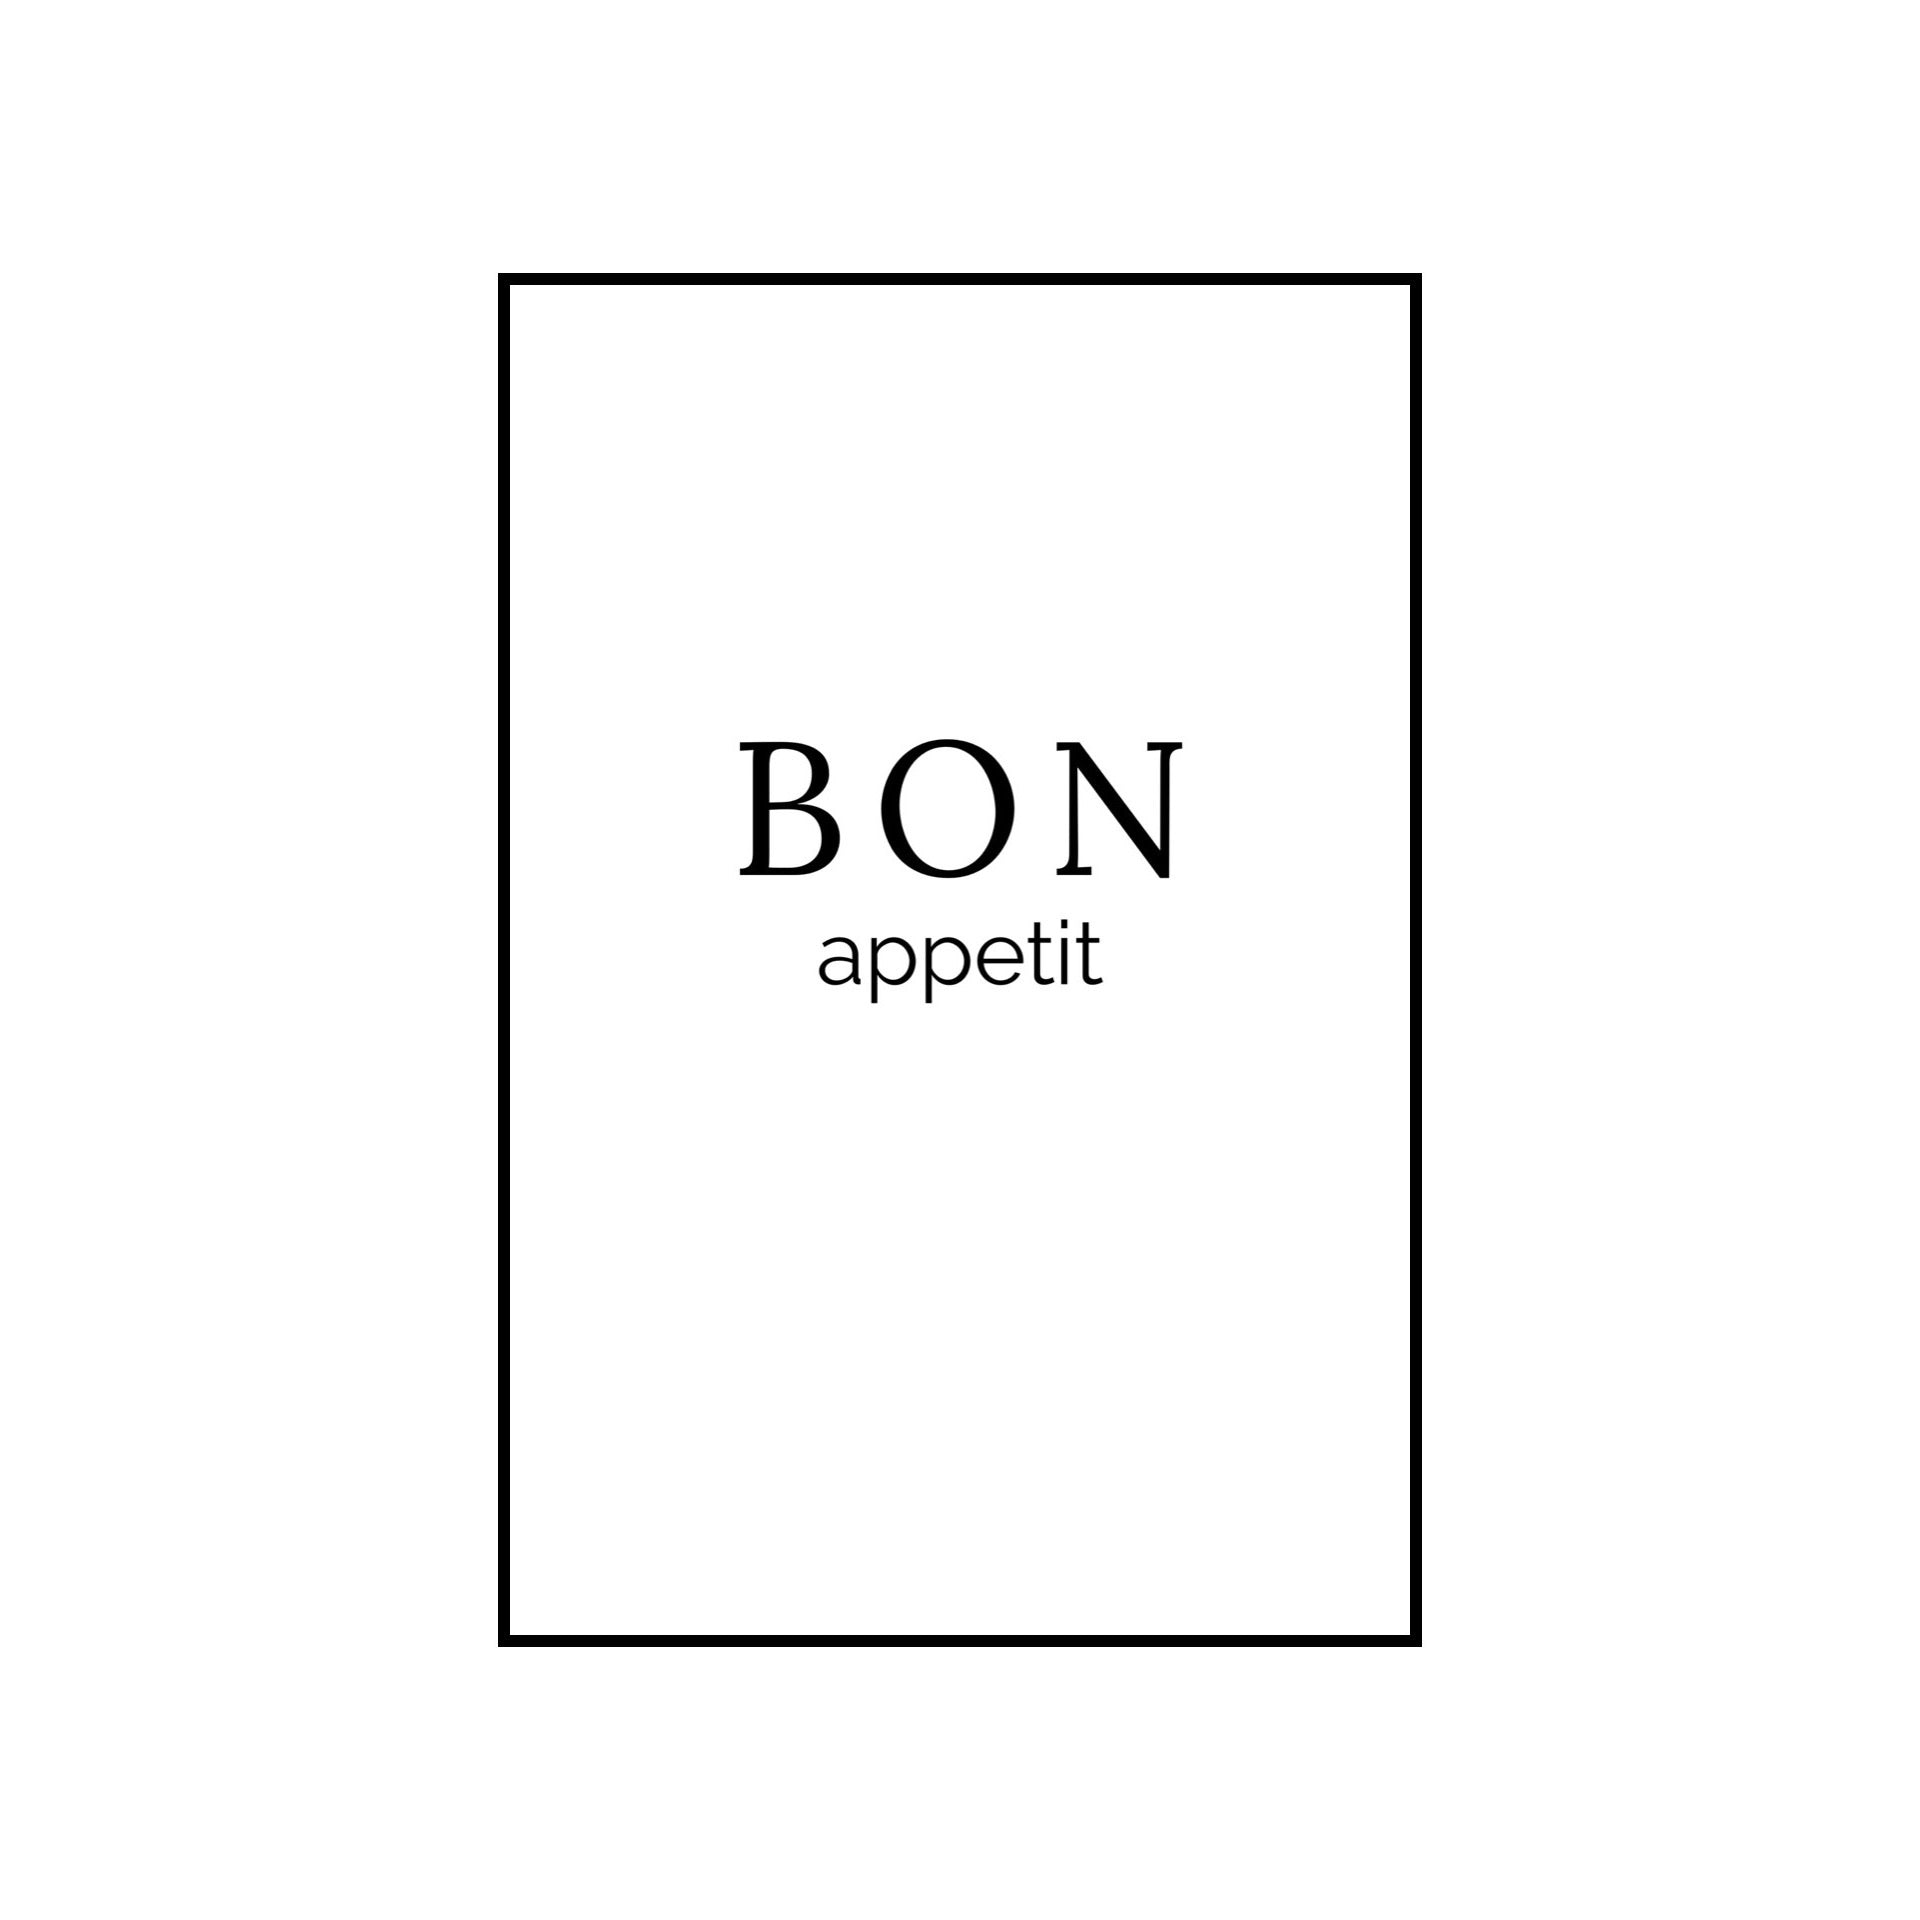 Bon appetit - THE WALL STYLIST